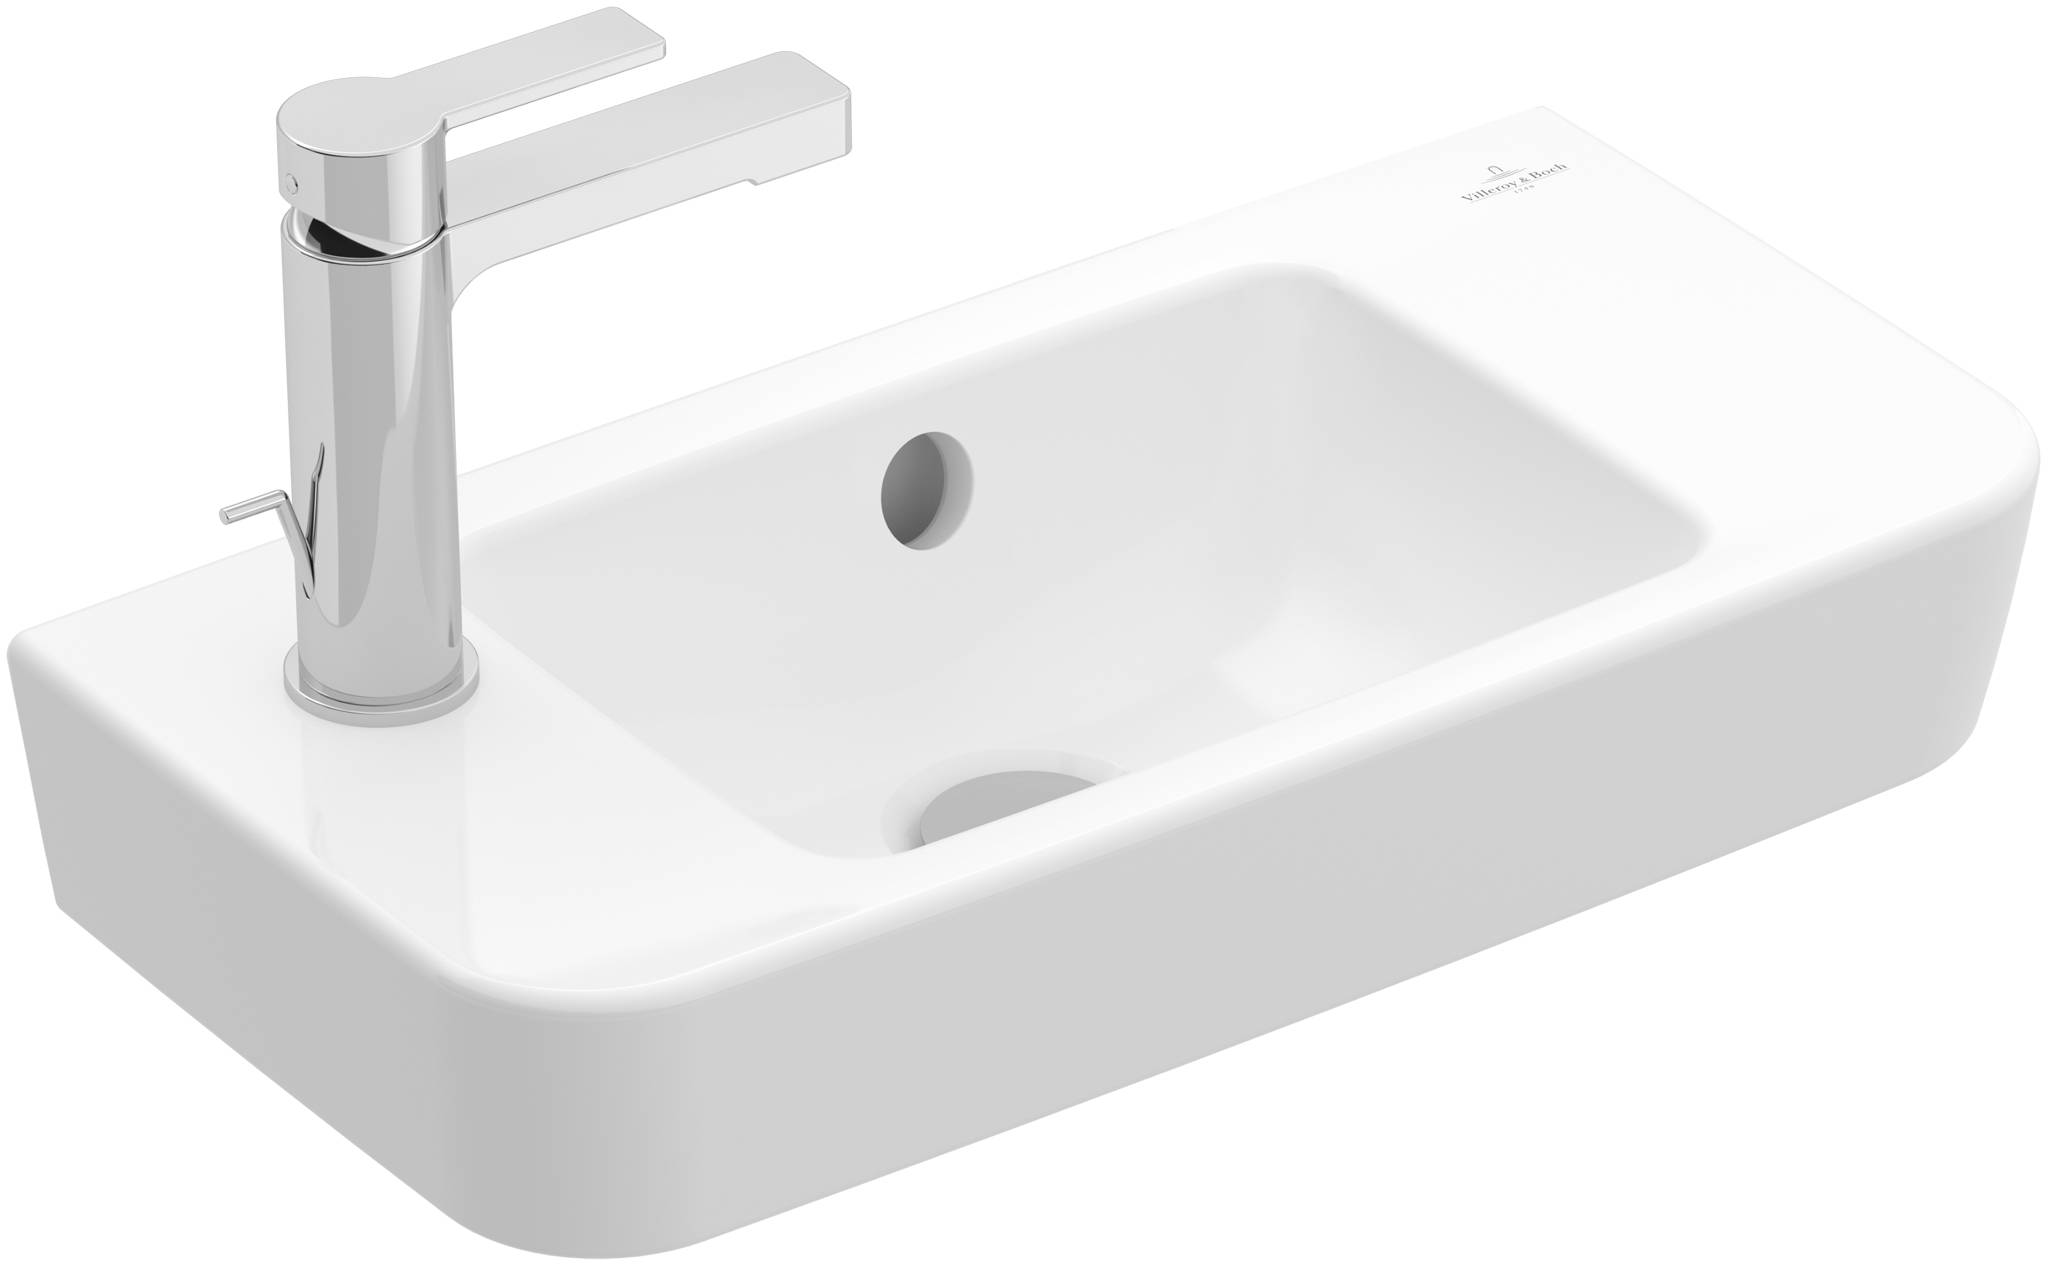 O.novo Handwashbasin Compact 4342R5